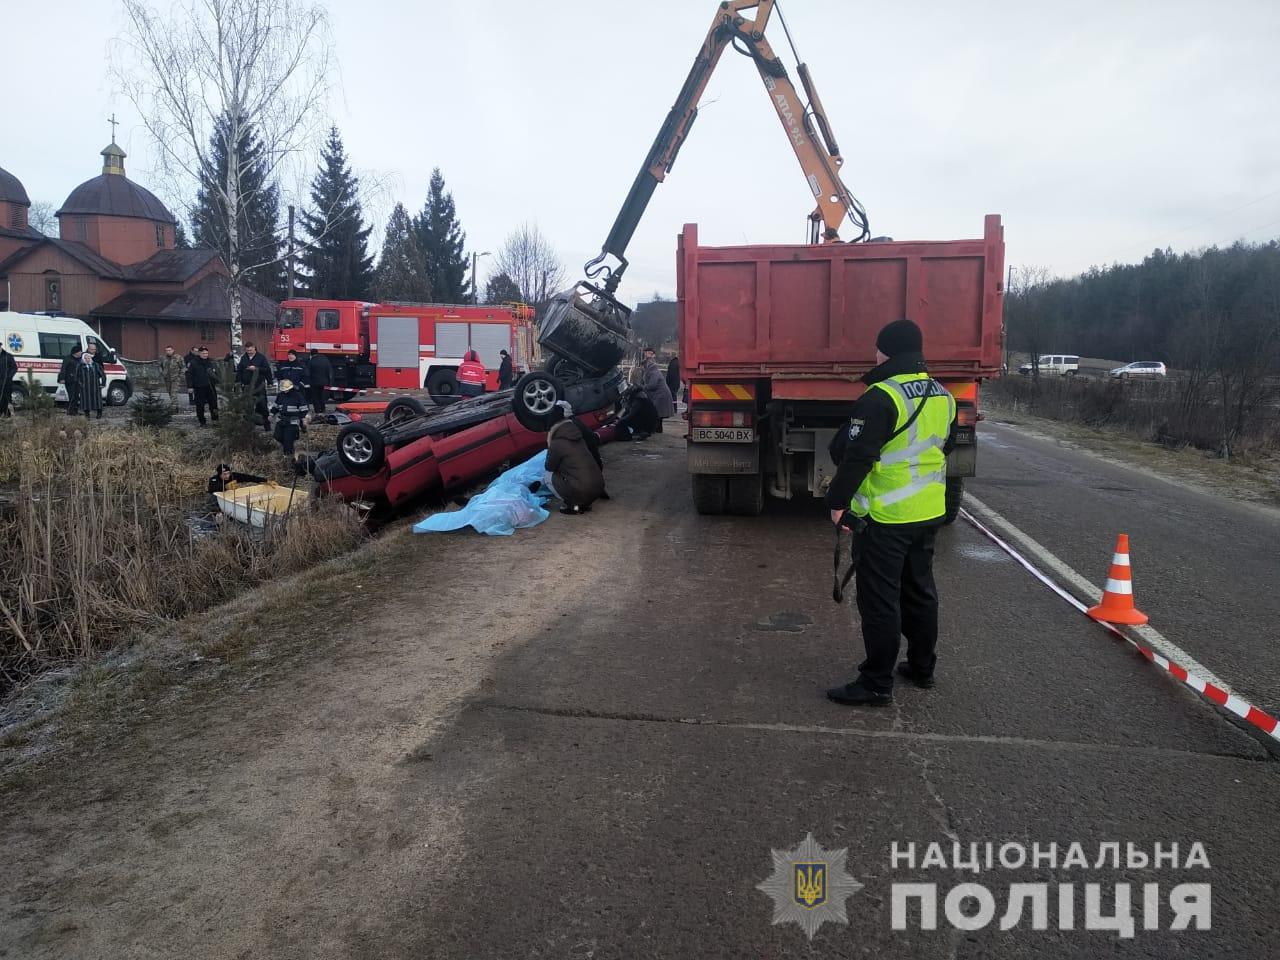 В ДТП на Львовщине погибли четверо парней: авто слетело в озеро и перевернулось, фото — Нацполиция